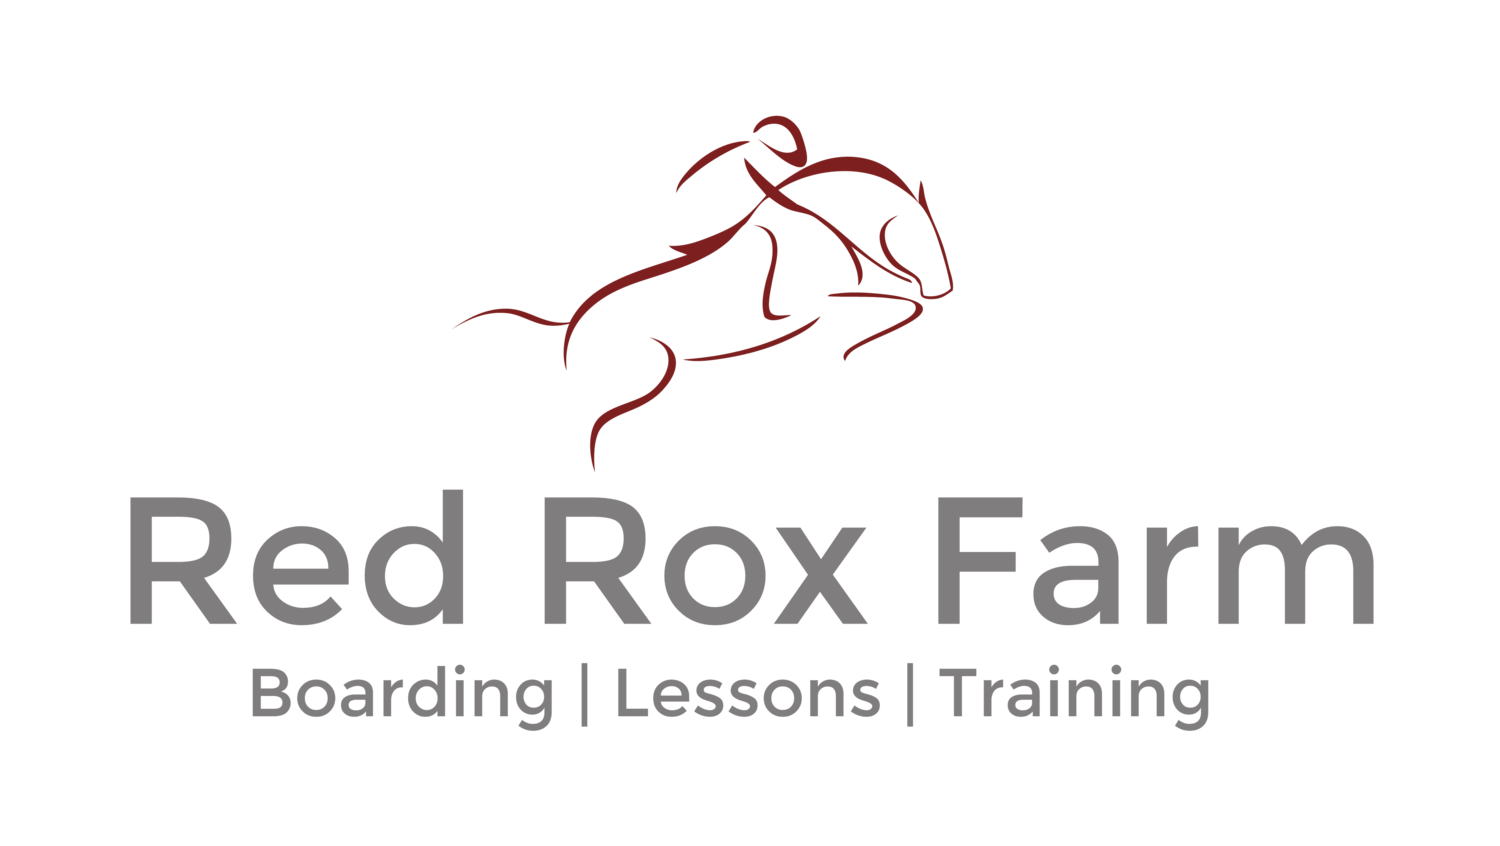 Red Rox Farm